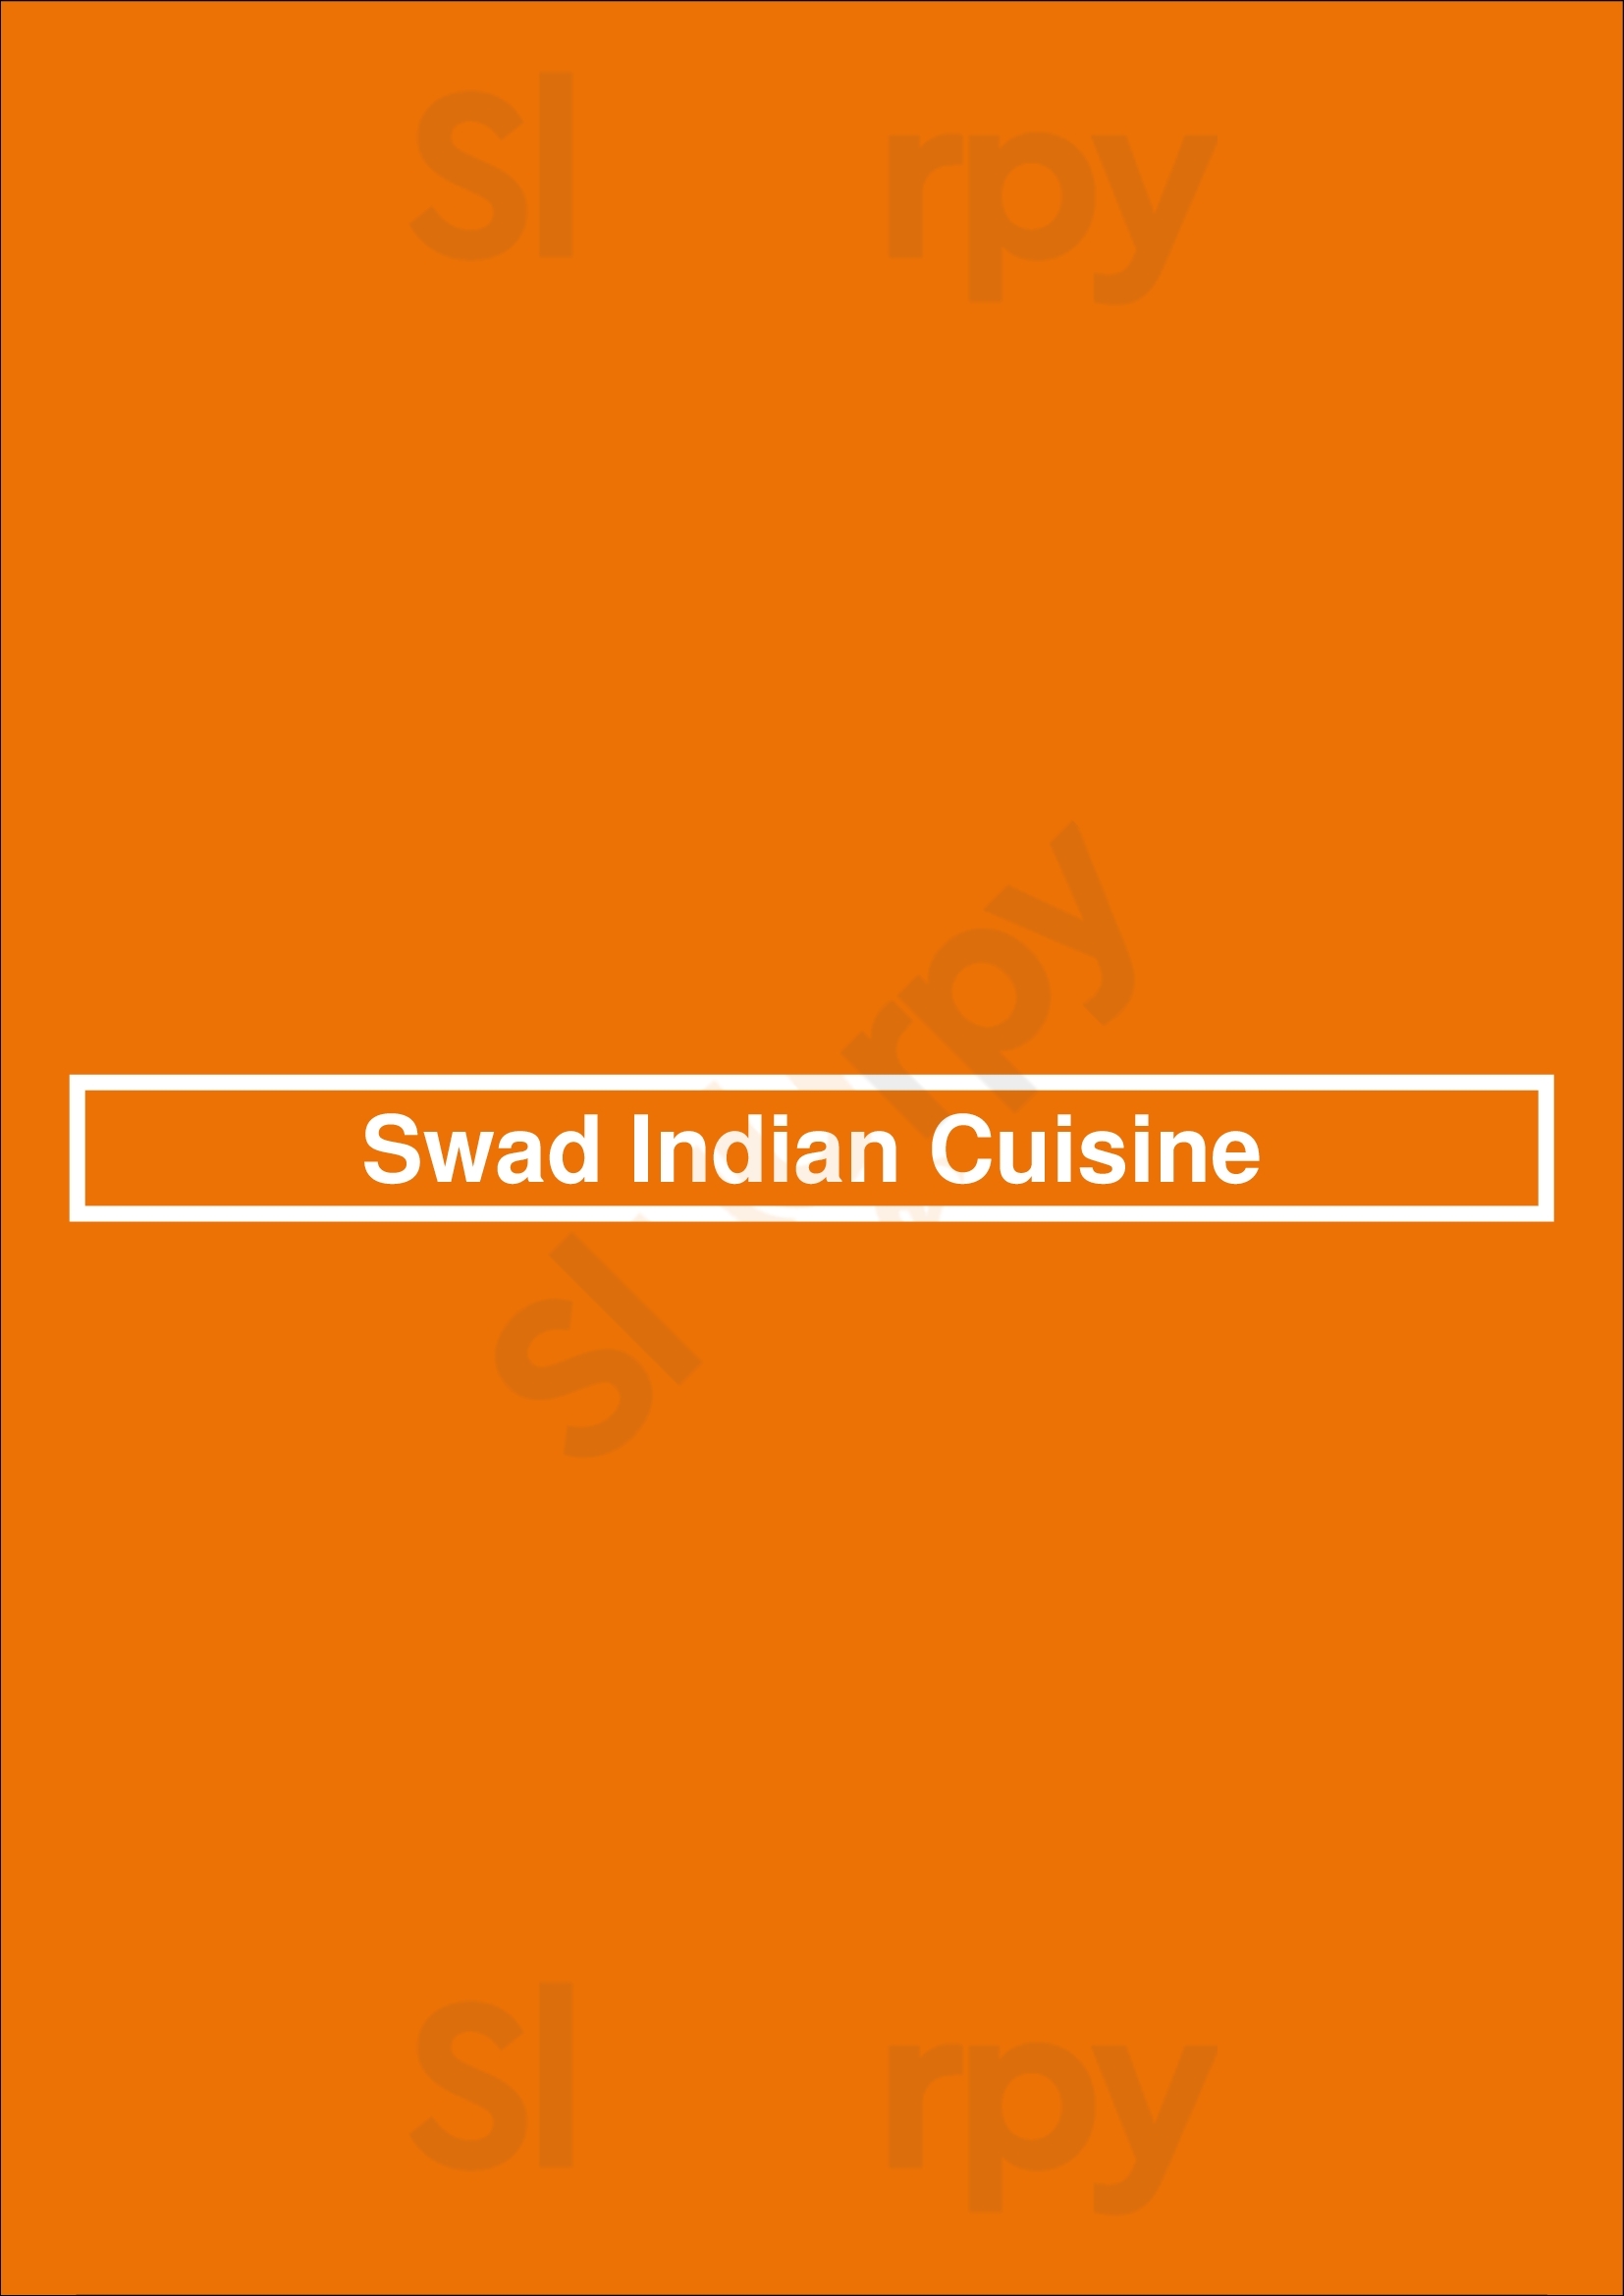 Swad Indian Cuisine Lafayette Menu - 1